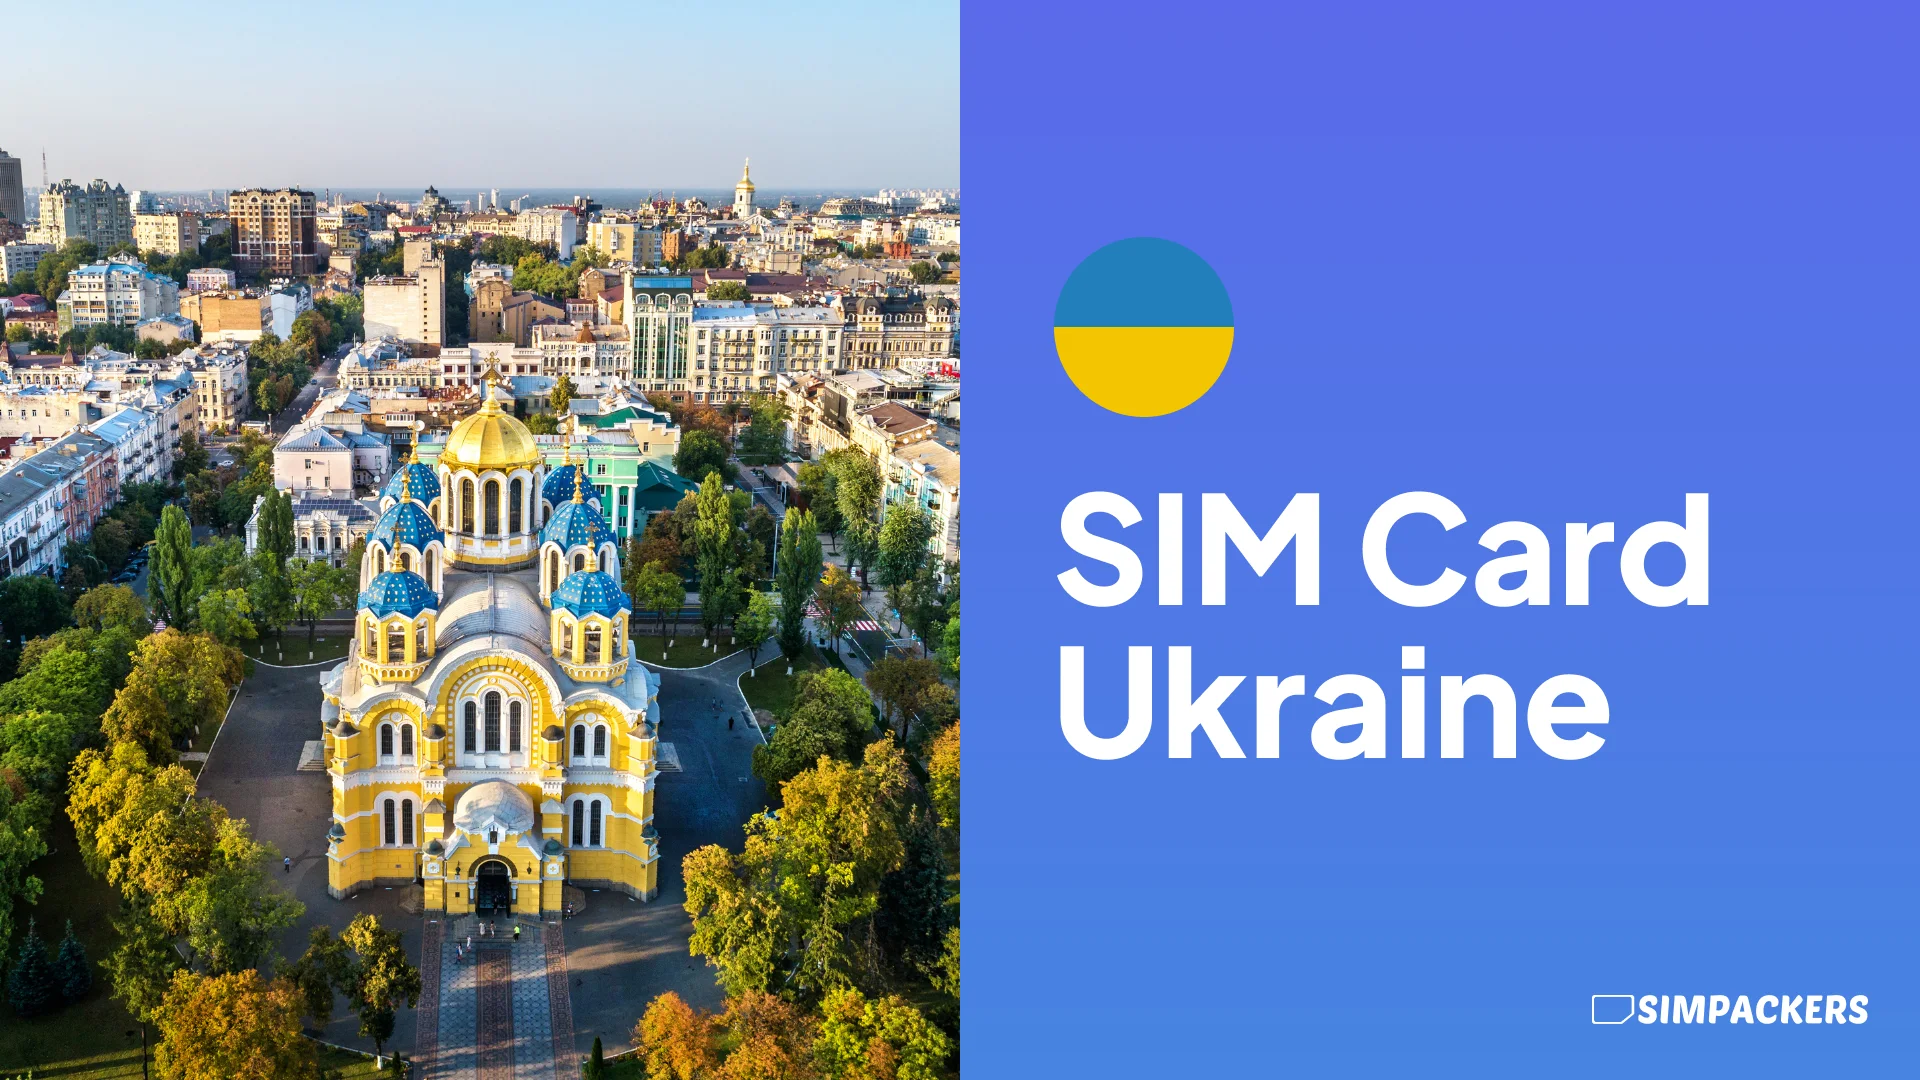 EN/FEATURED_IMAGES/sim-card-ukraine.webp